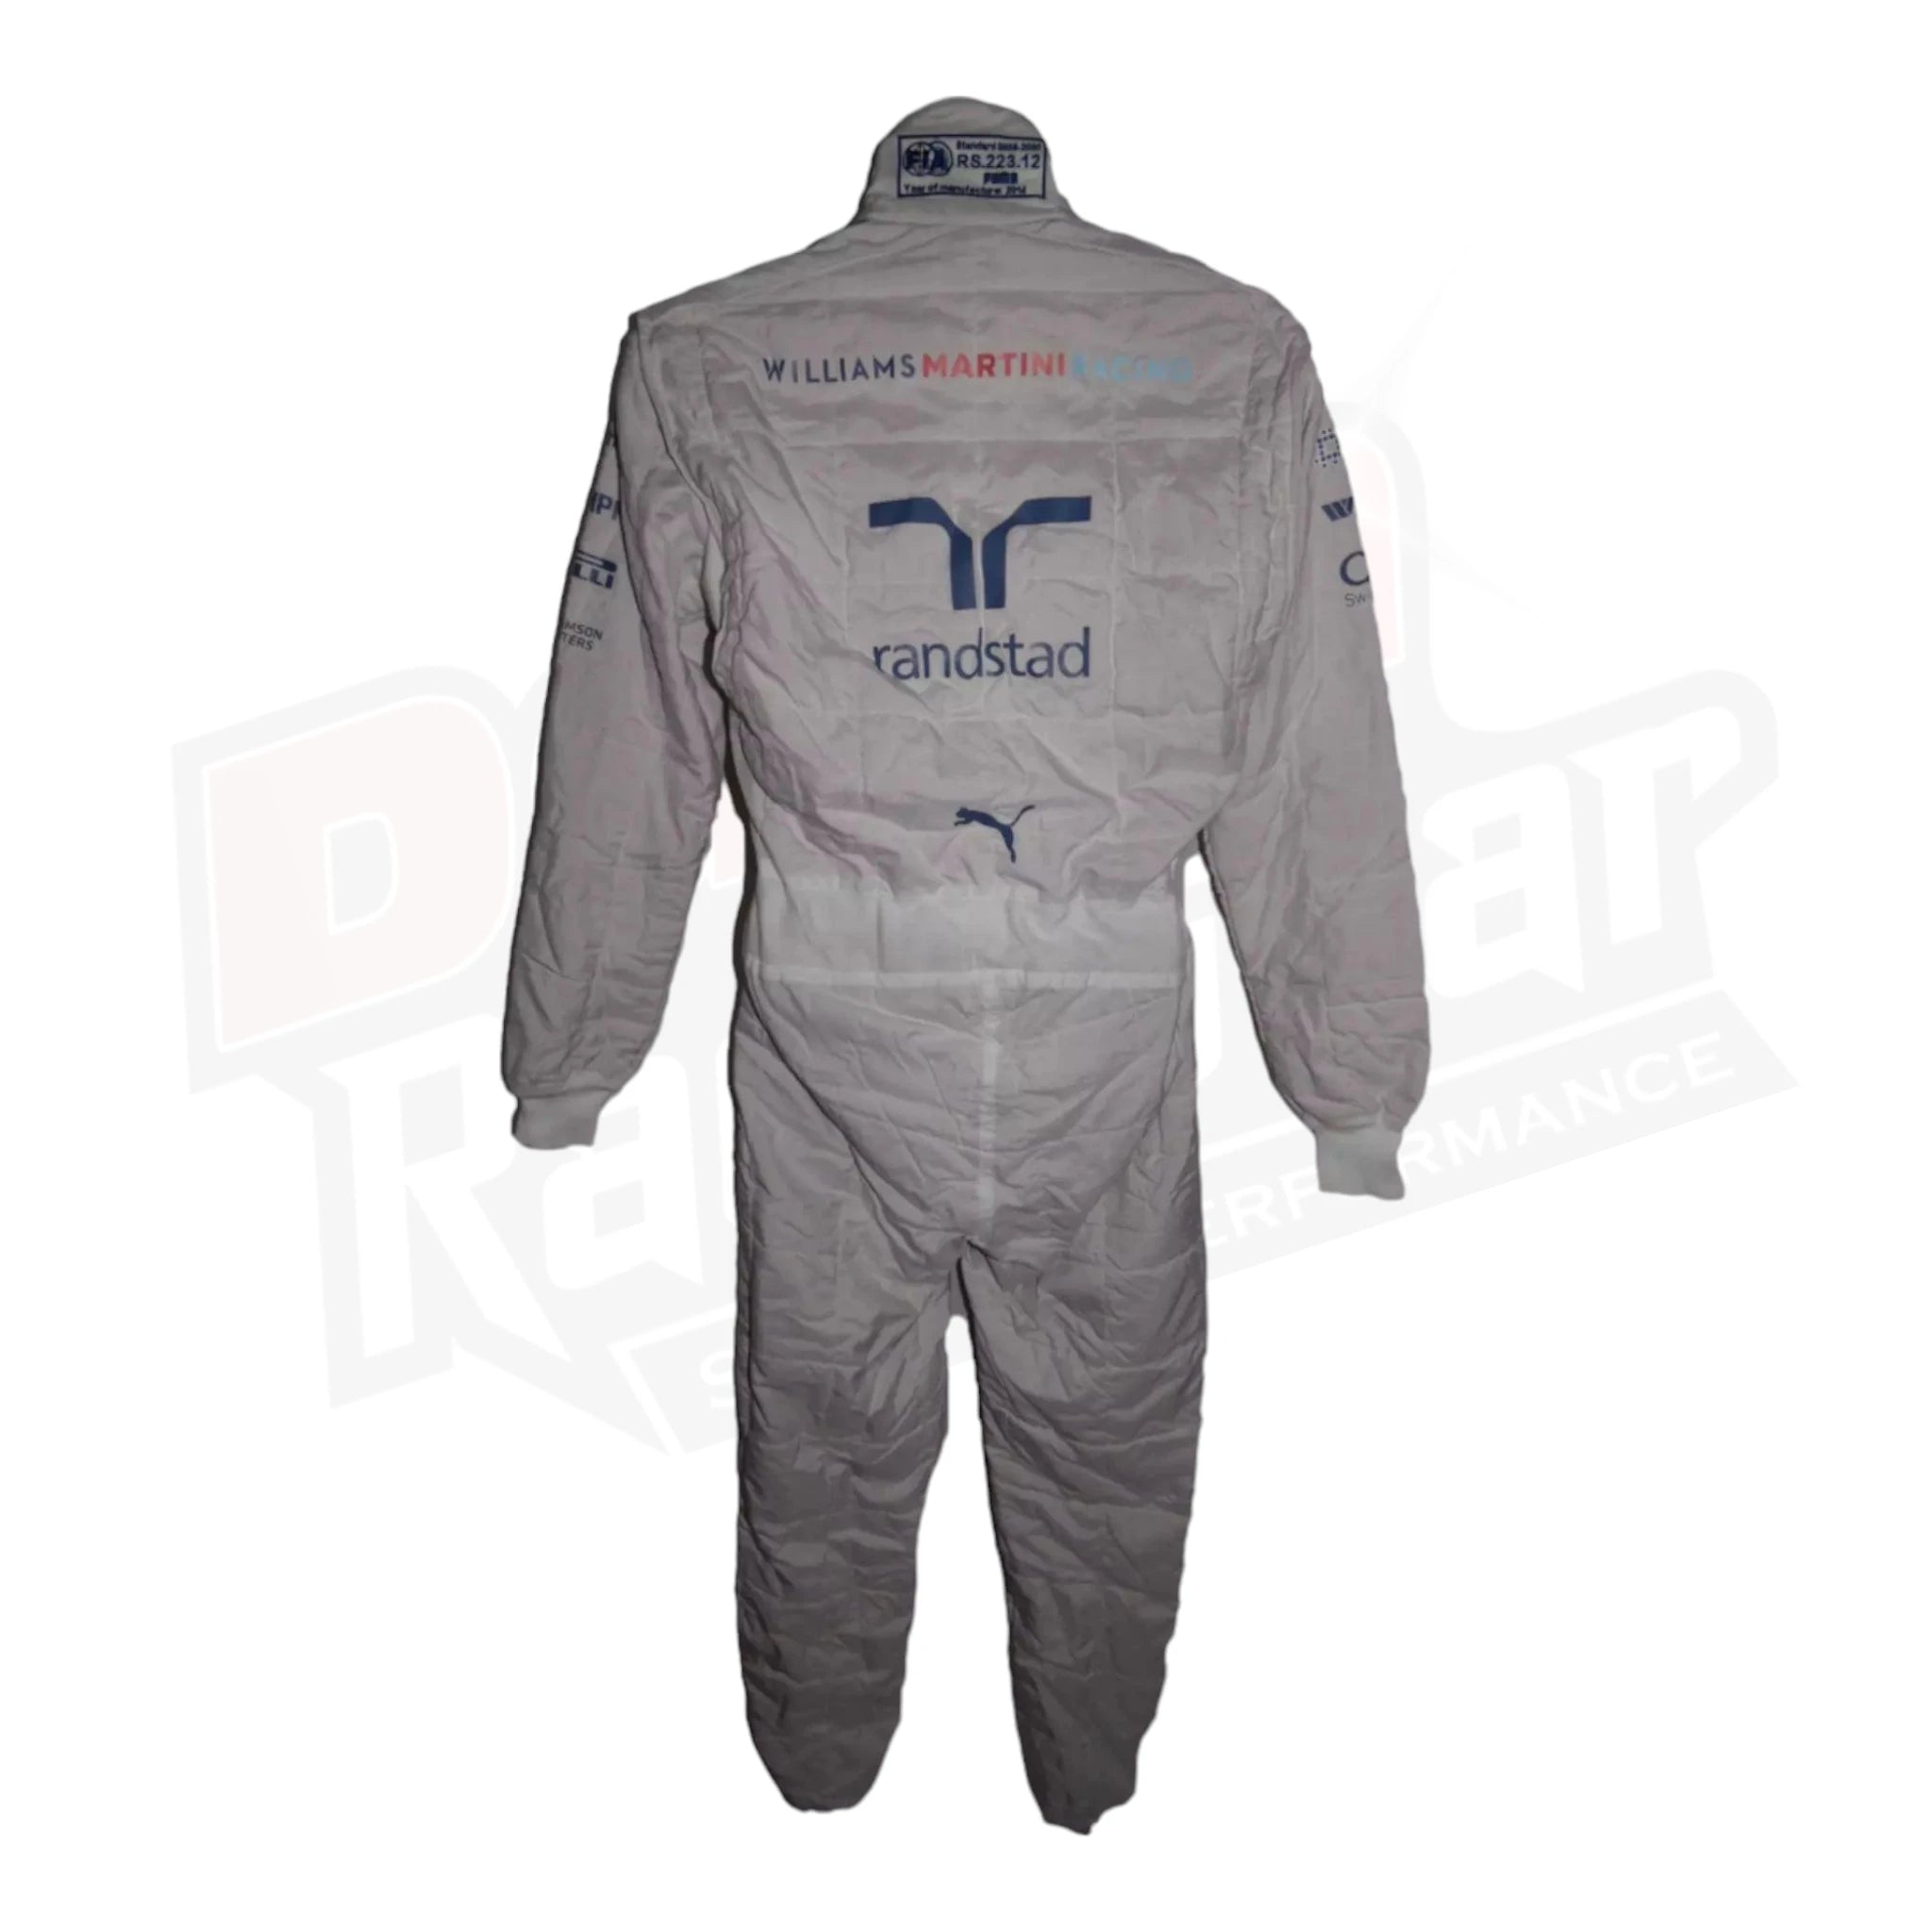 Valtteri Bottas 2014 Williams Martini race suit – Russian GP spec